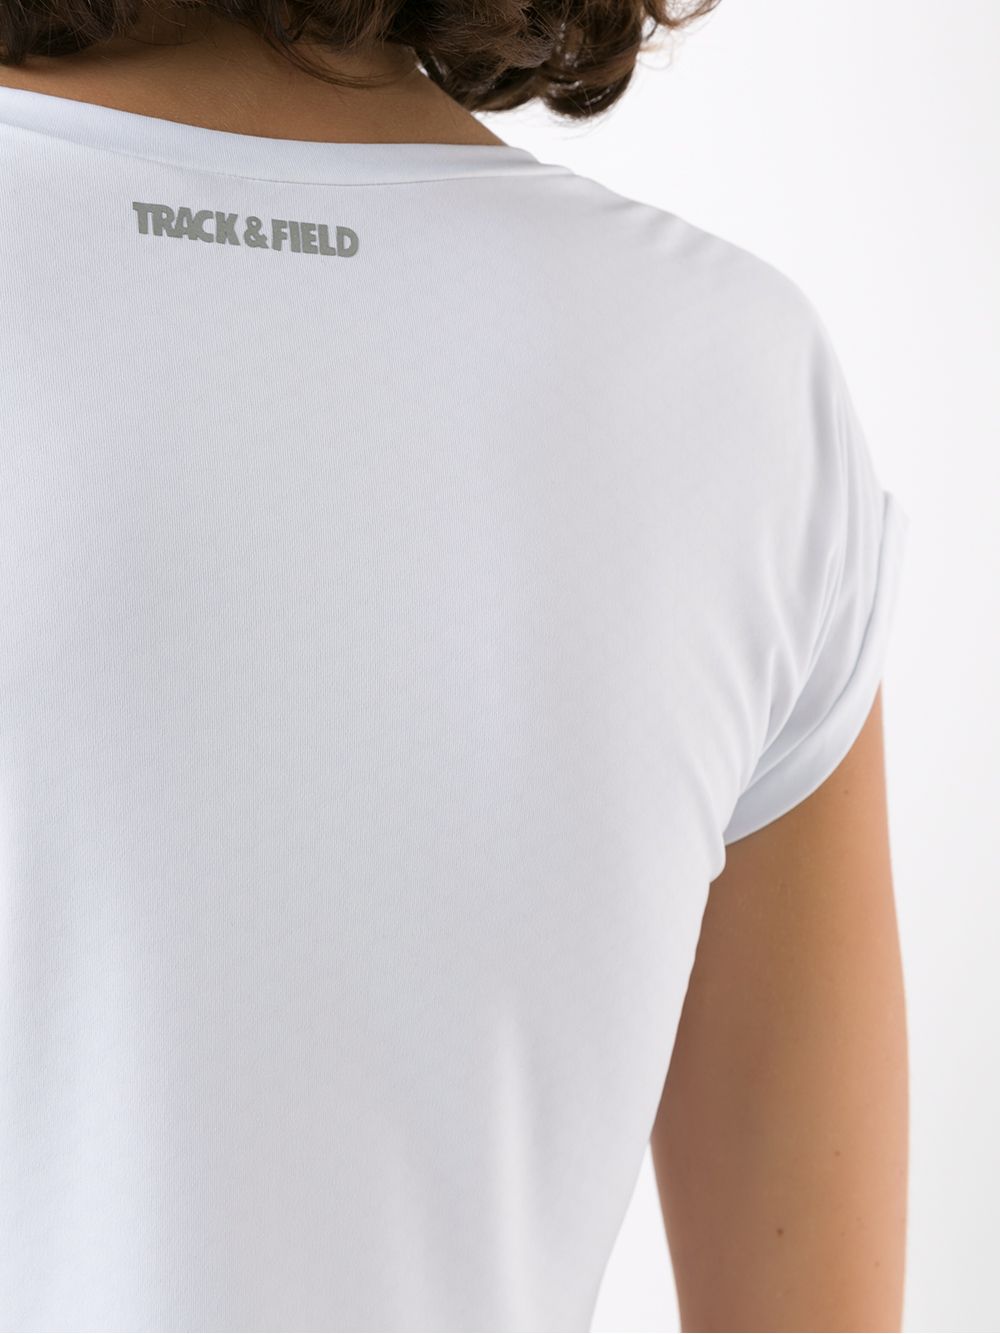 фото Track & field футболка outlast с короткими рукавами